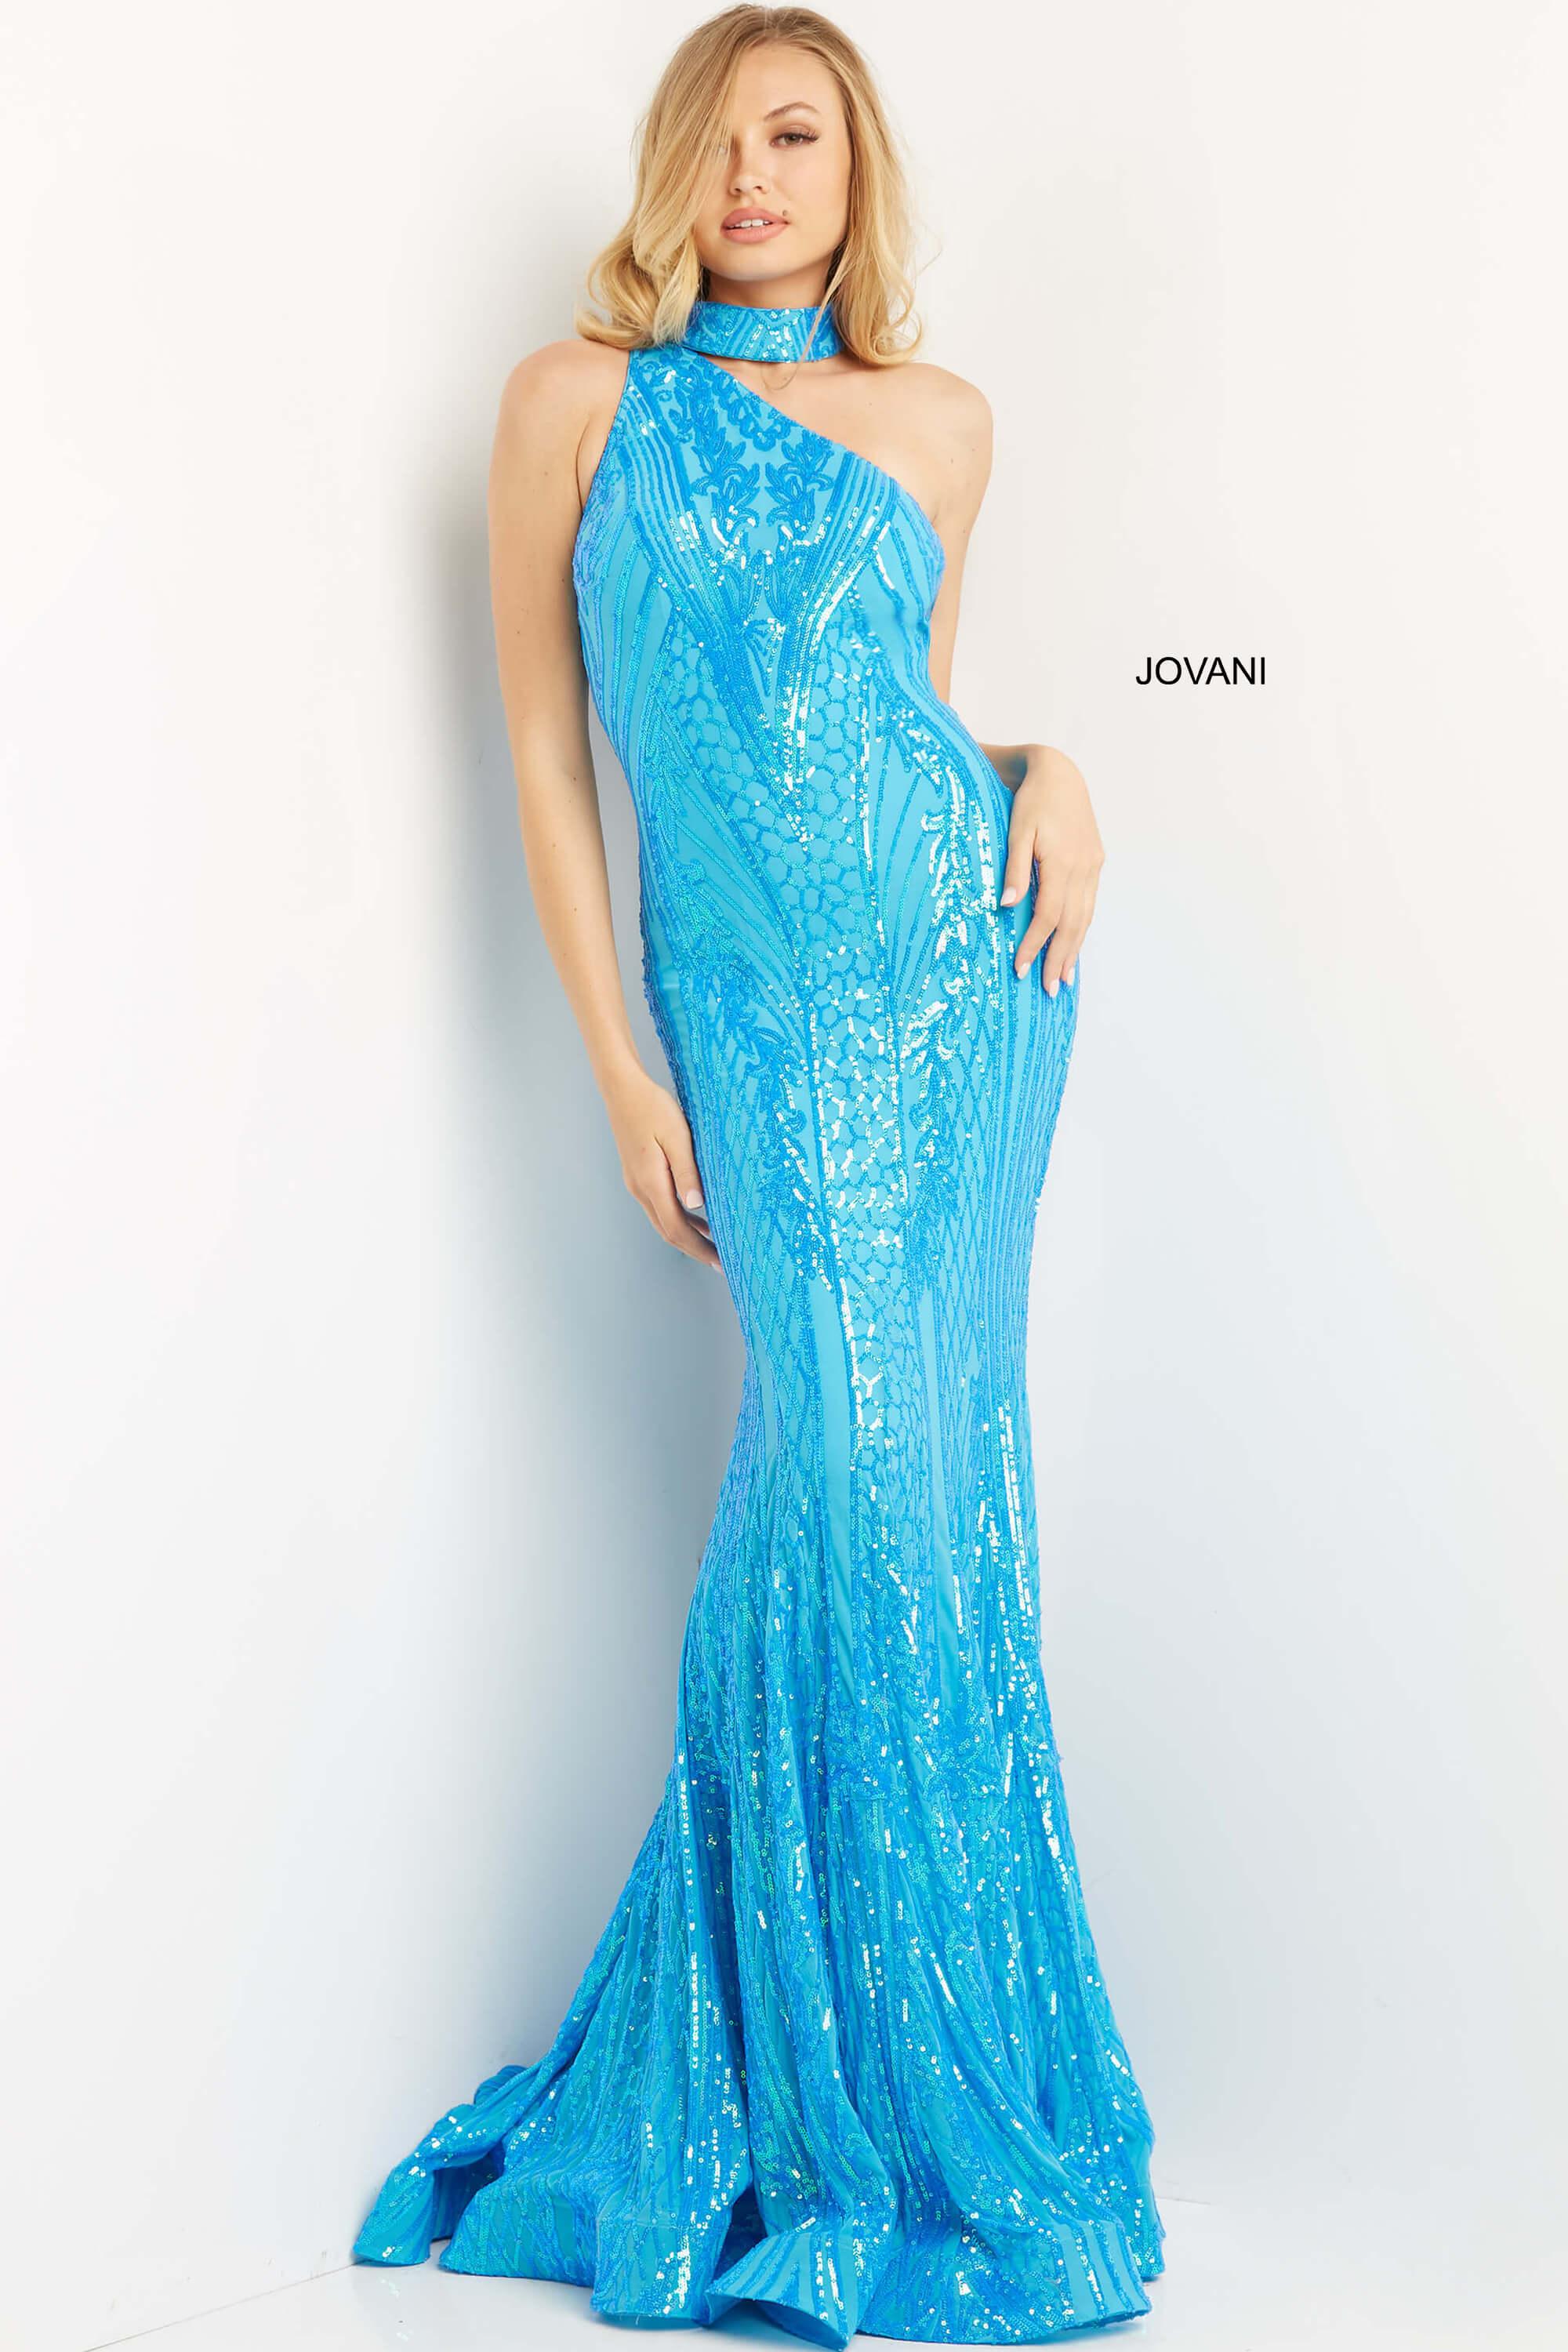 Jovani One Shoulder Choker Long Prom Dress 08338 - The Dress Outlet